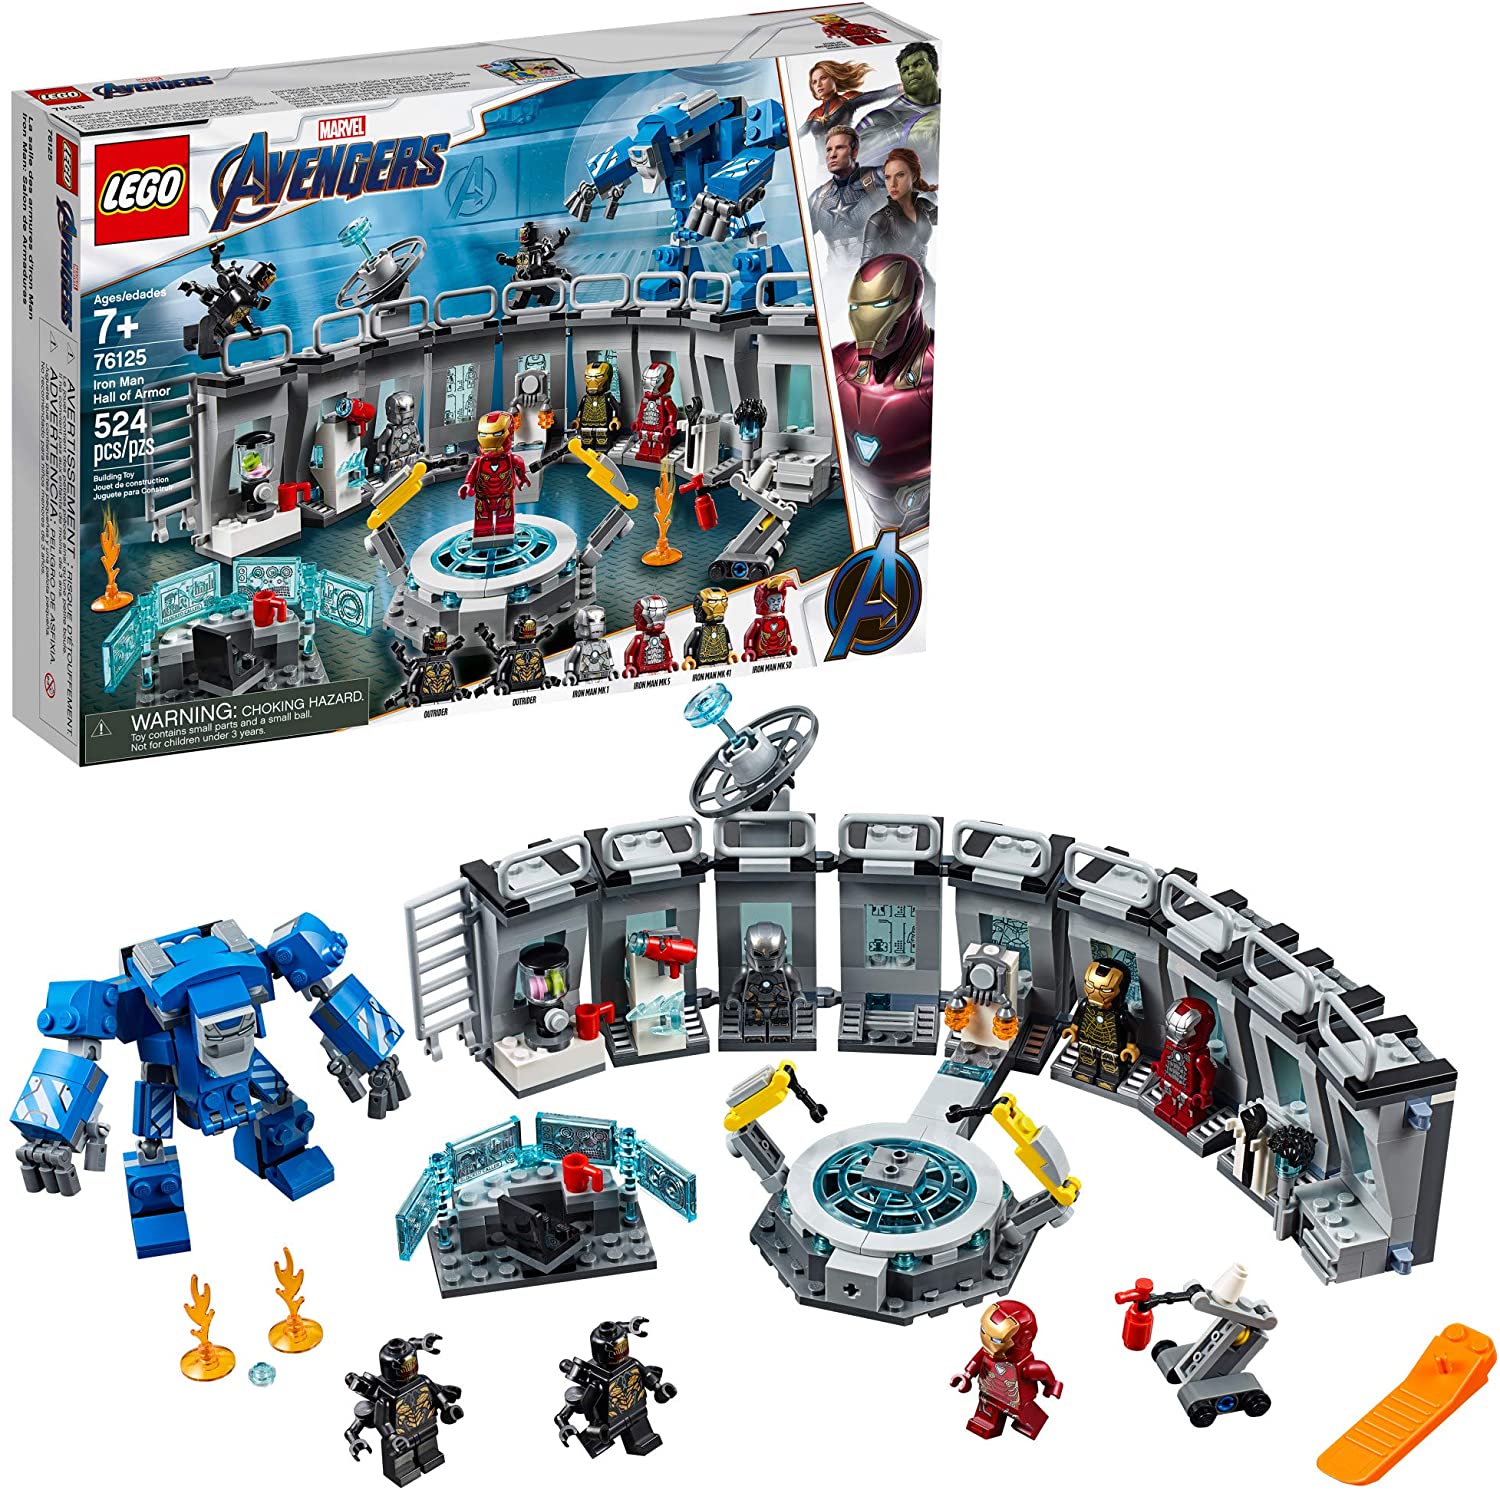 LEGO Marvel Avengers Iron Man Hall of Armor 76125, 524-Piece